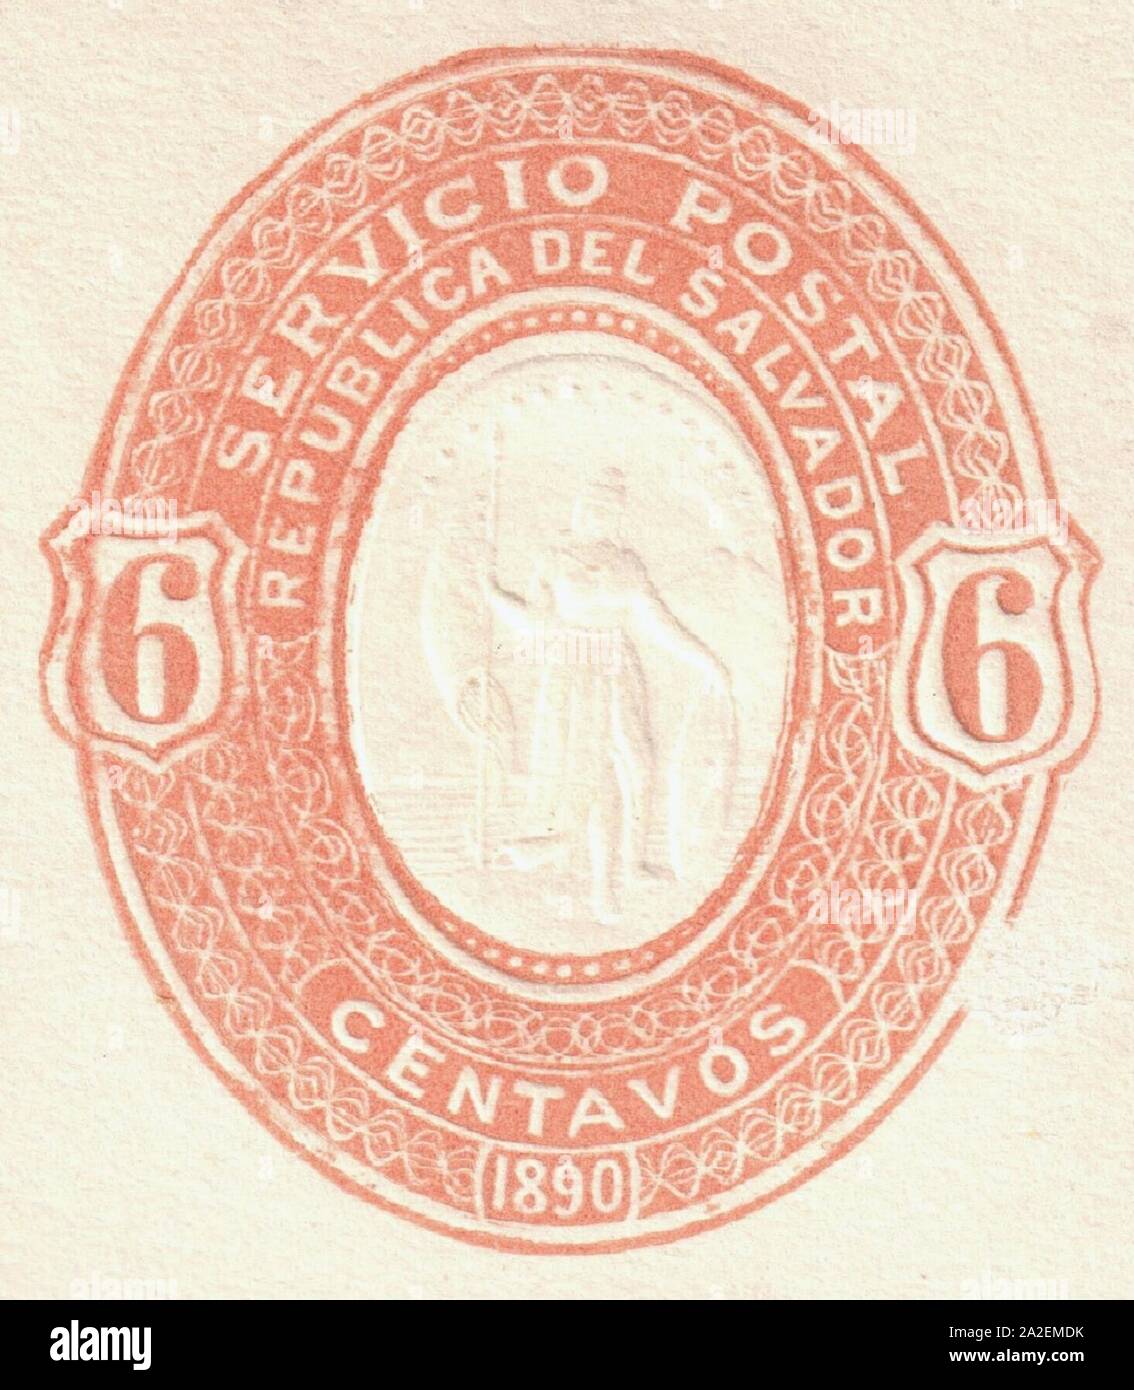 El Salvador 1890 6c wrapper imprinted stamp. Stock Photo